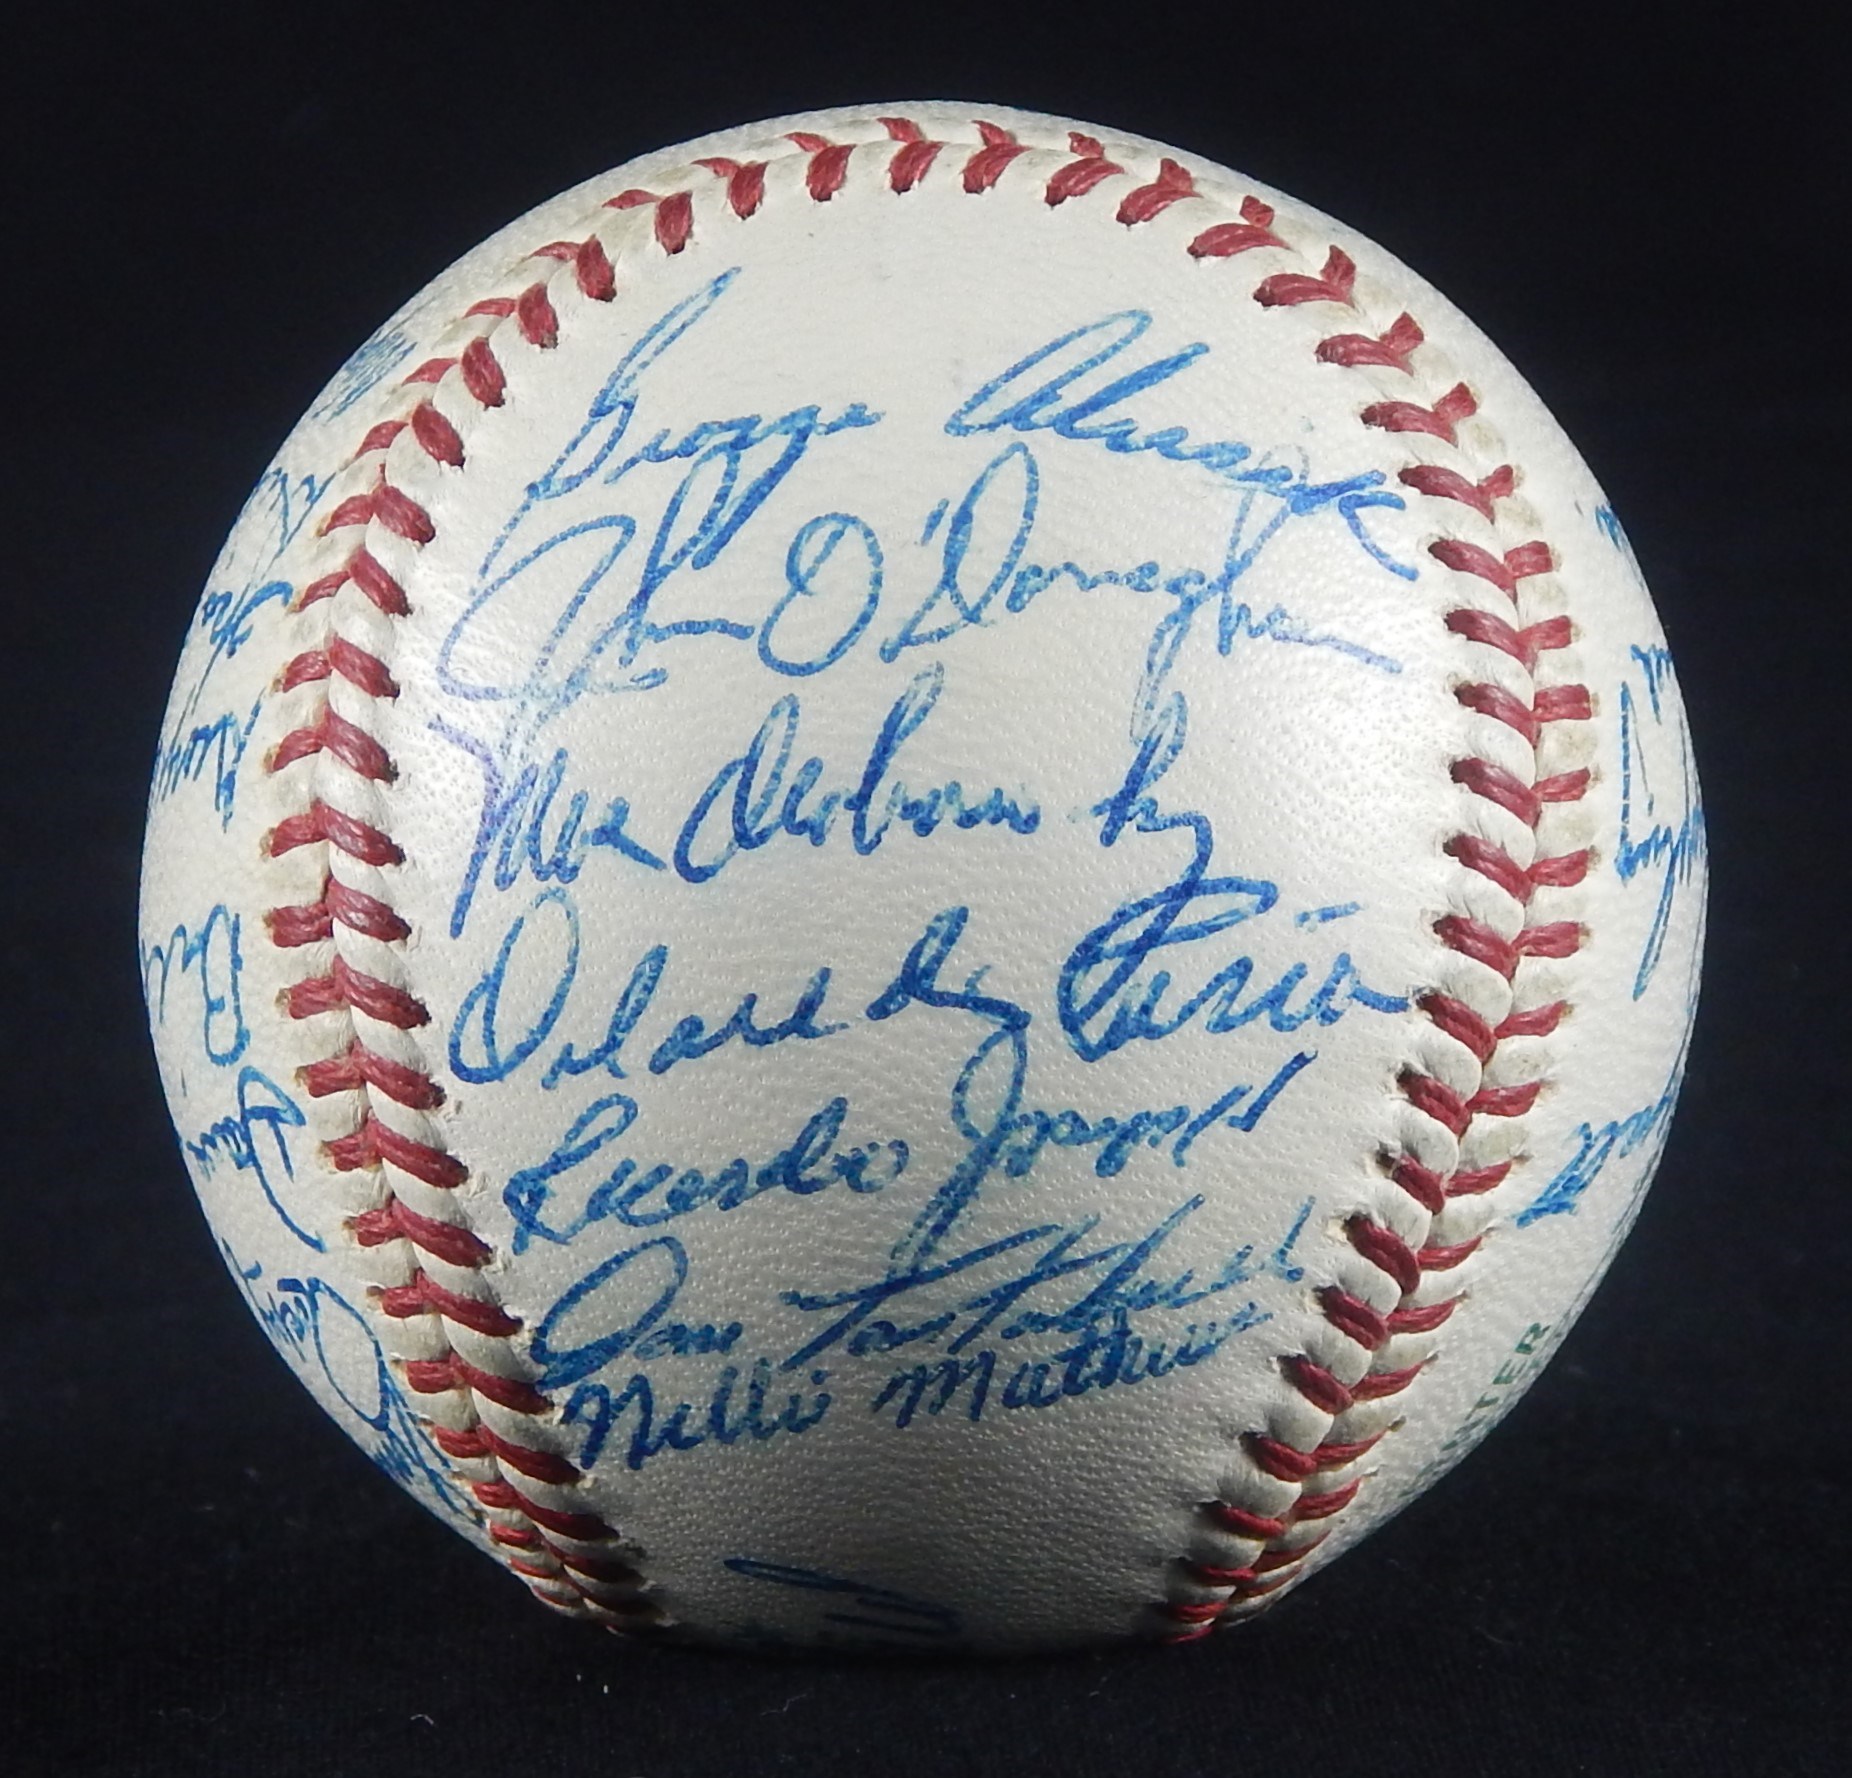 - High Grade 1964 Kansas City Athletics Team Signed Baseball